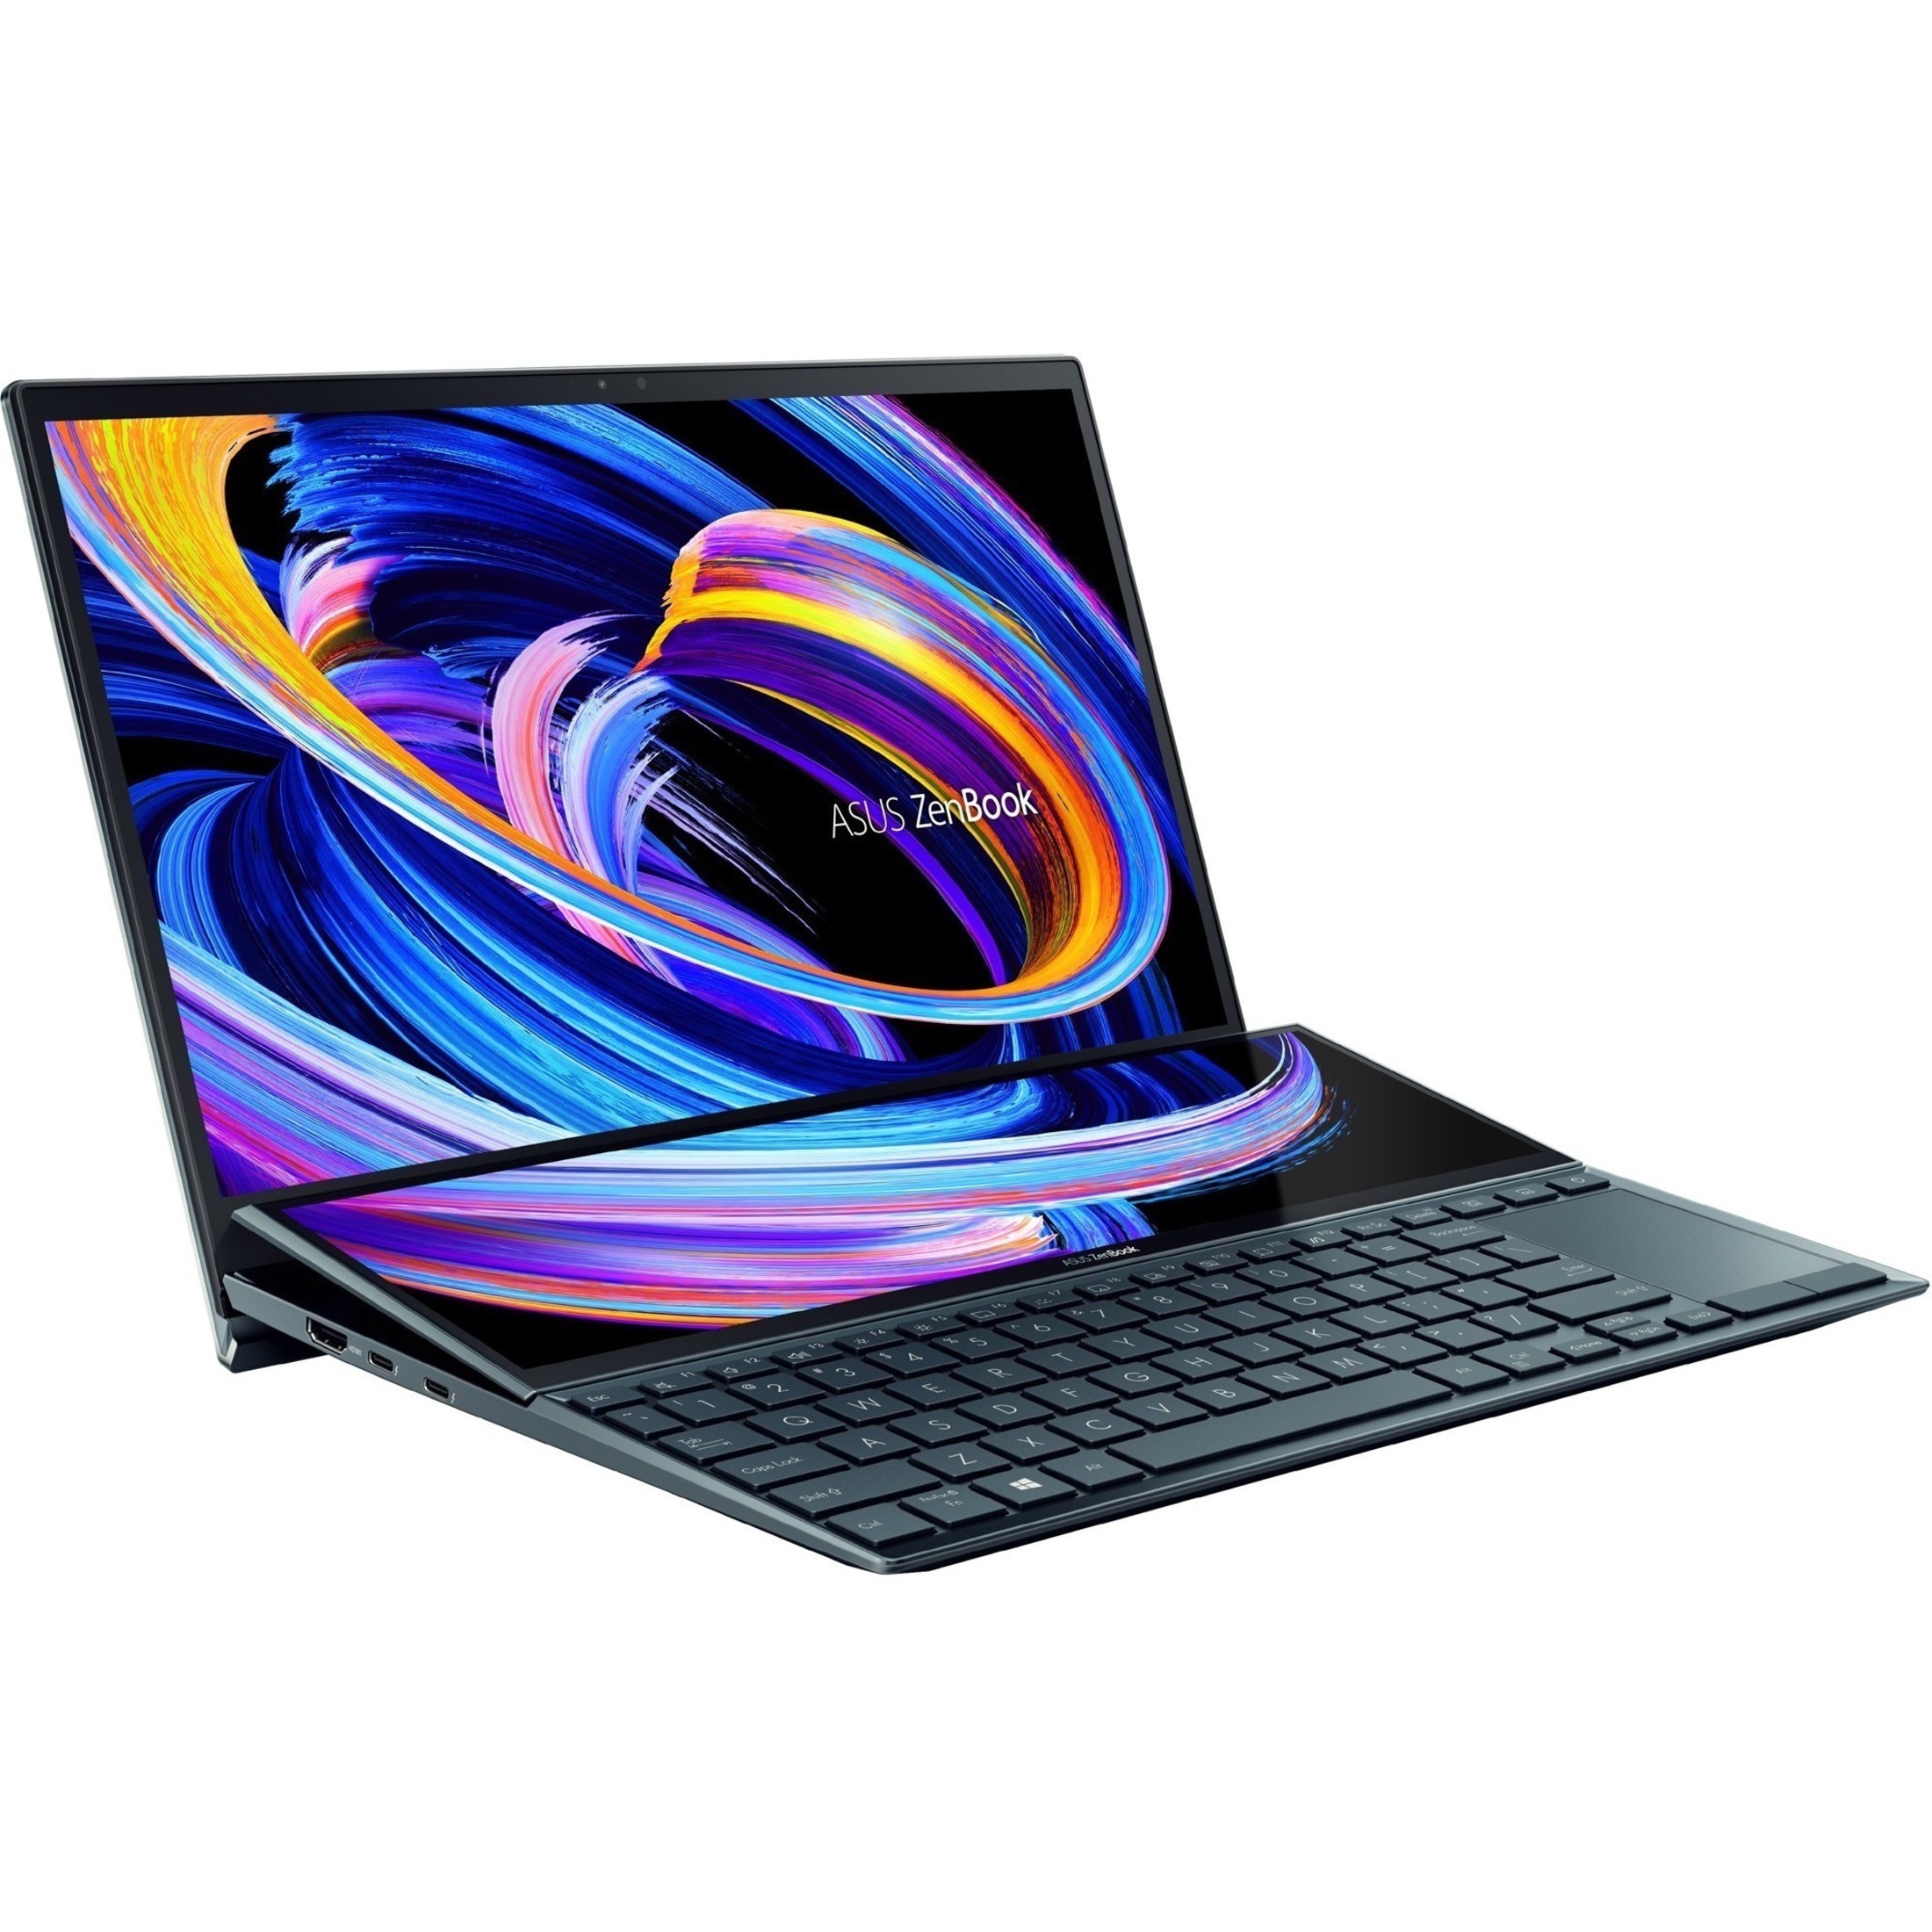 ASUS ZenBook 14 Ultra-Slim Laptop 14” Full HD NanoEdge Display, Intel Core  i5-1135G7, 8GB RAM, 512GB PCIe SSD, NumberPad, Thunderbolt 4, Windows 10 H 